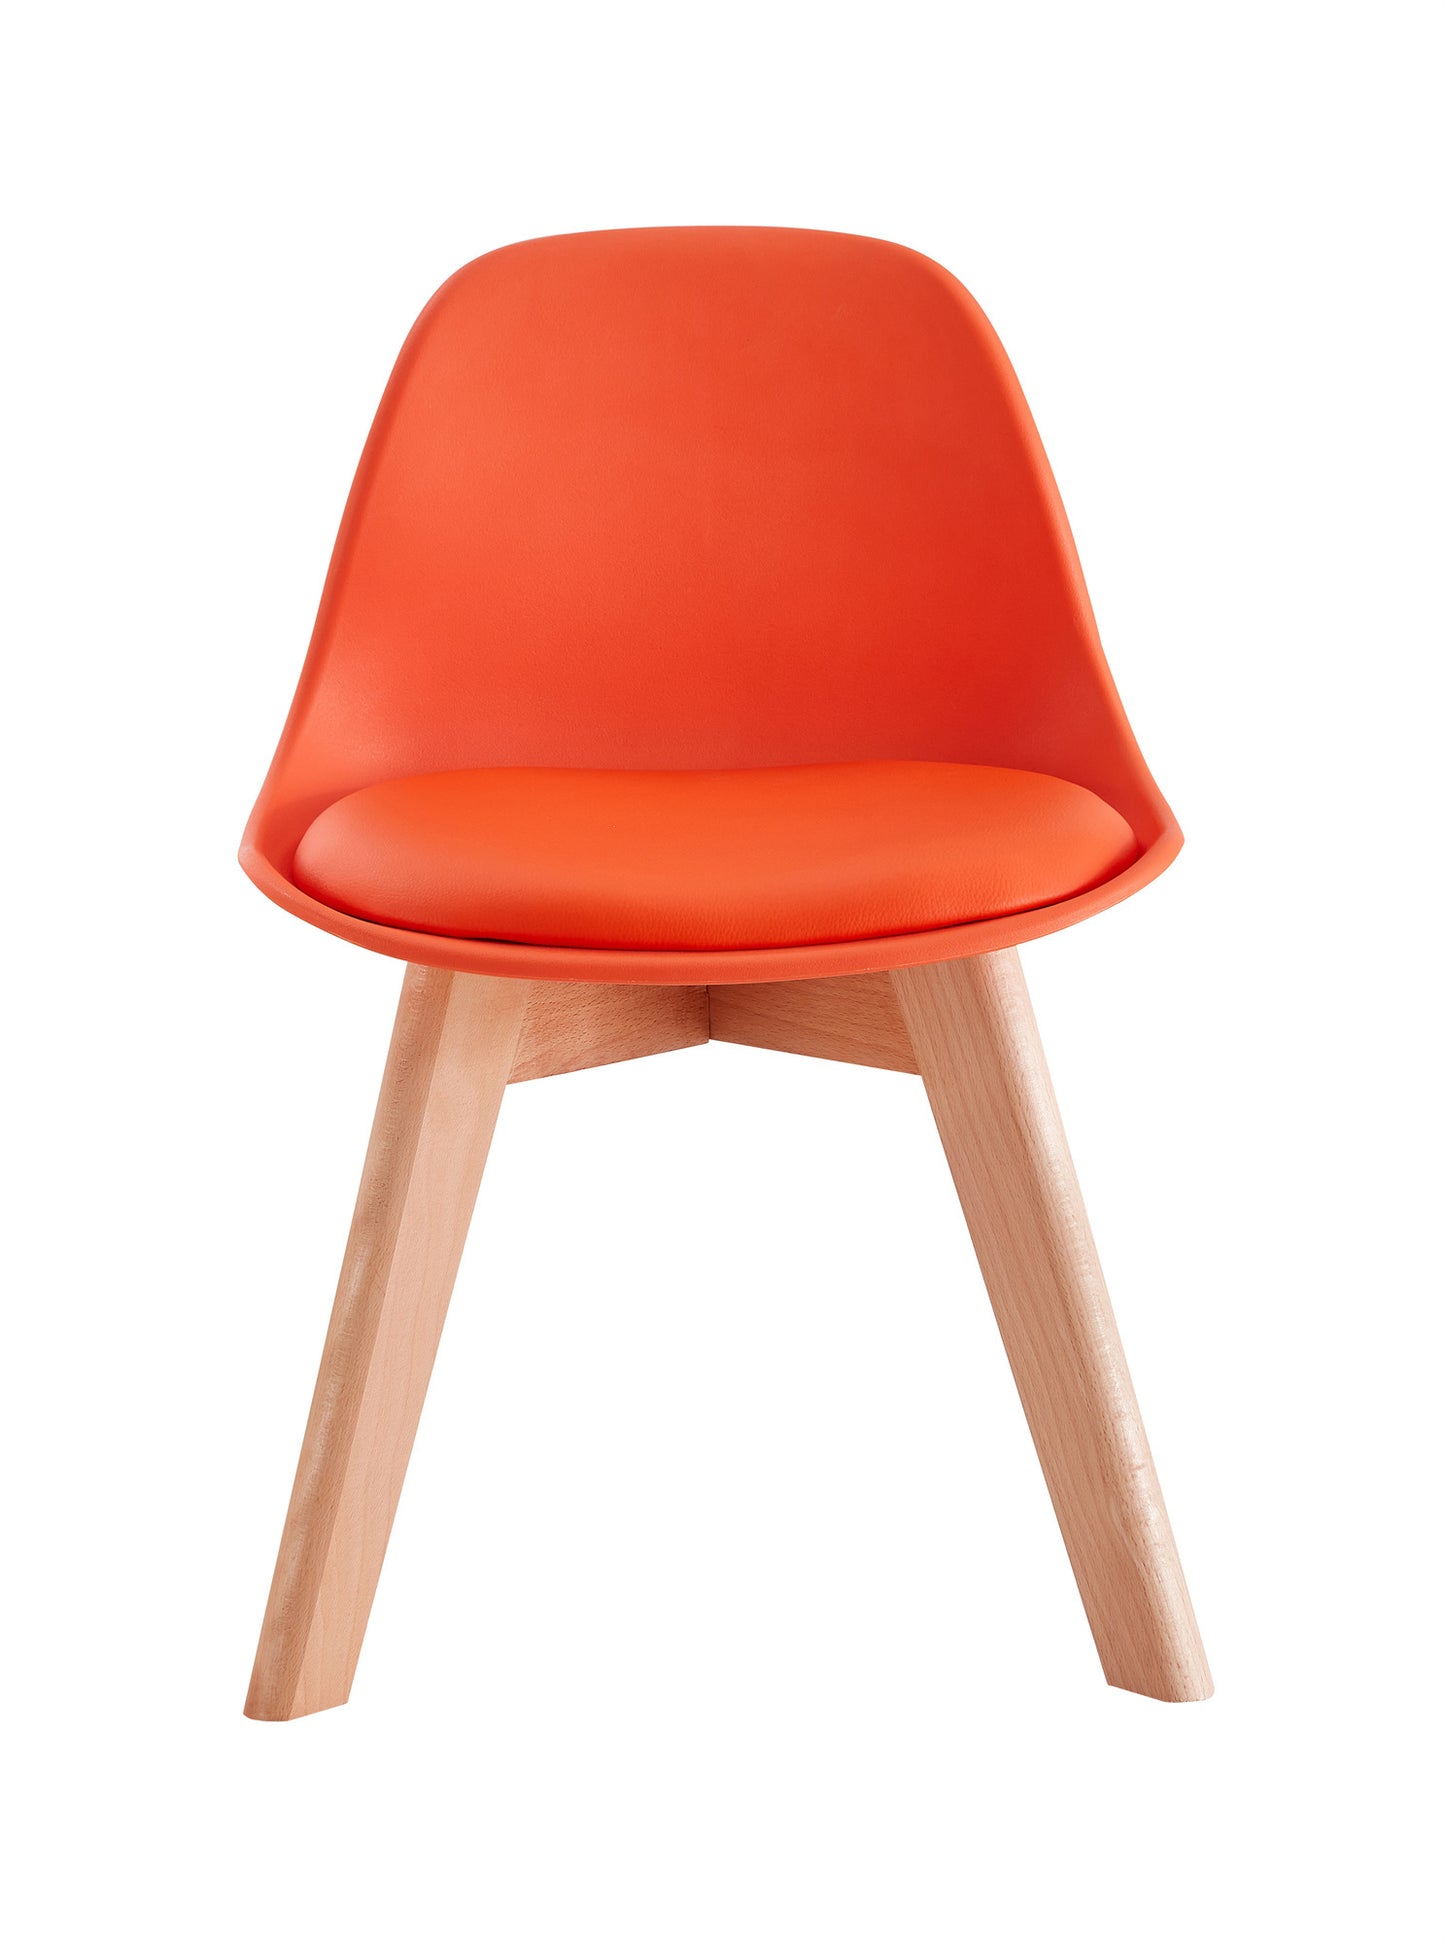 BB chair ,wood leg; pp back with cushion, ORANGE, 2 pcs per set